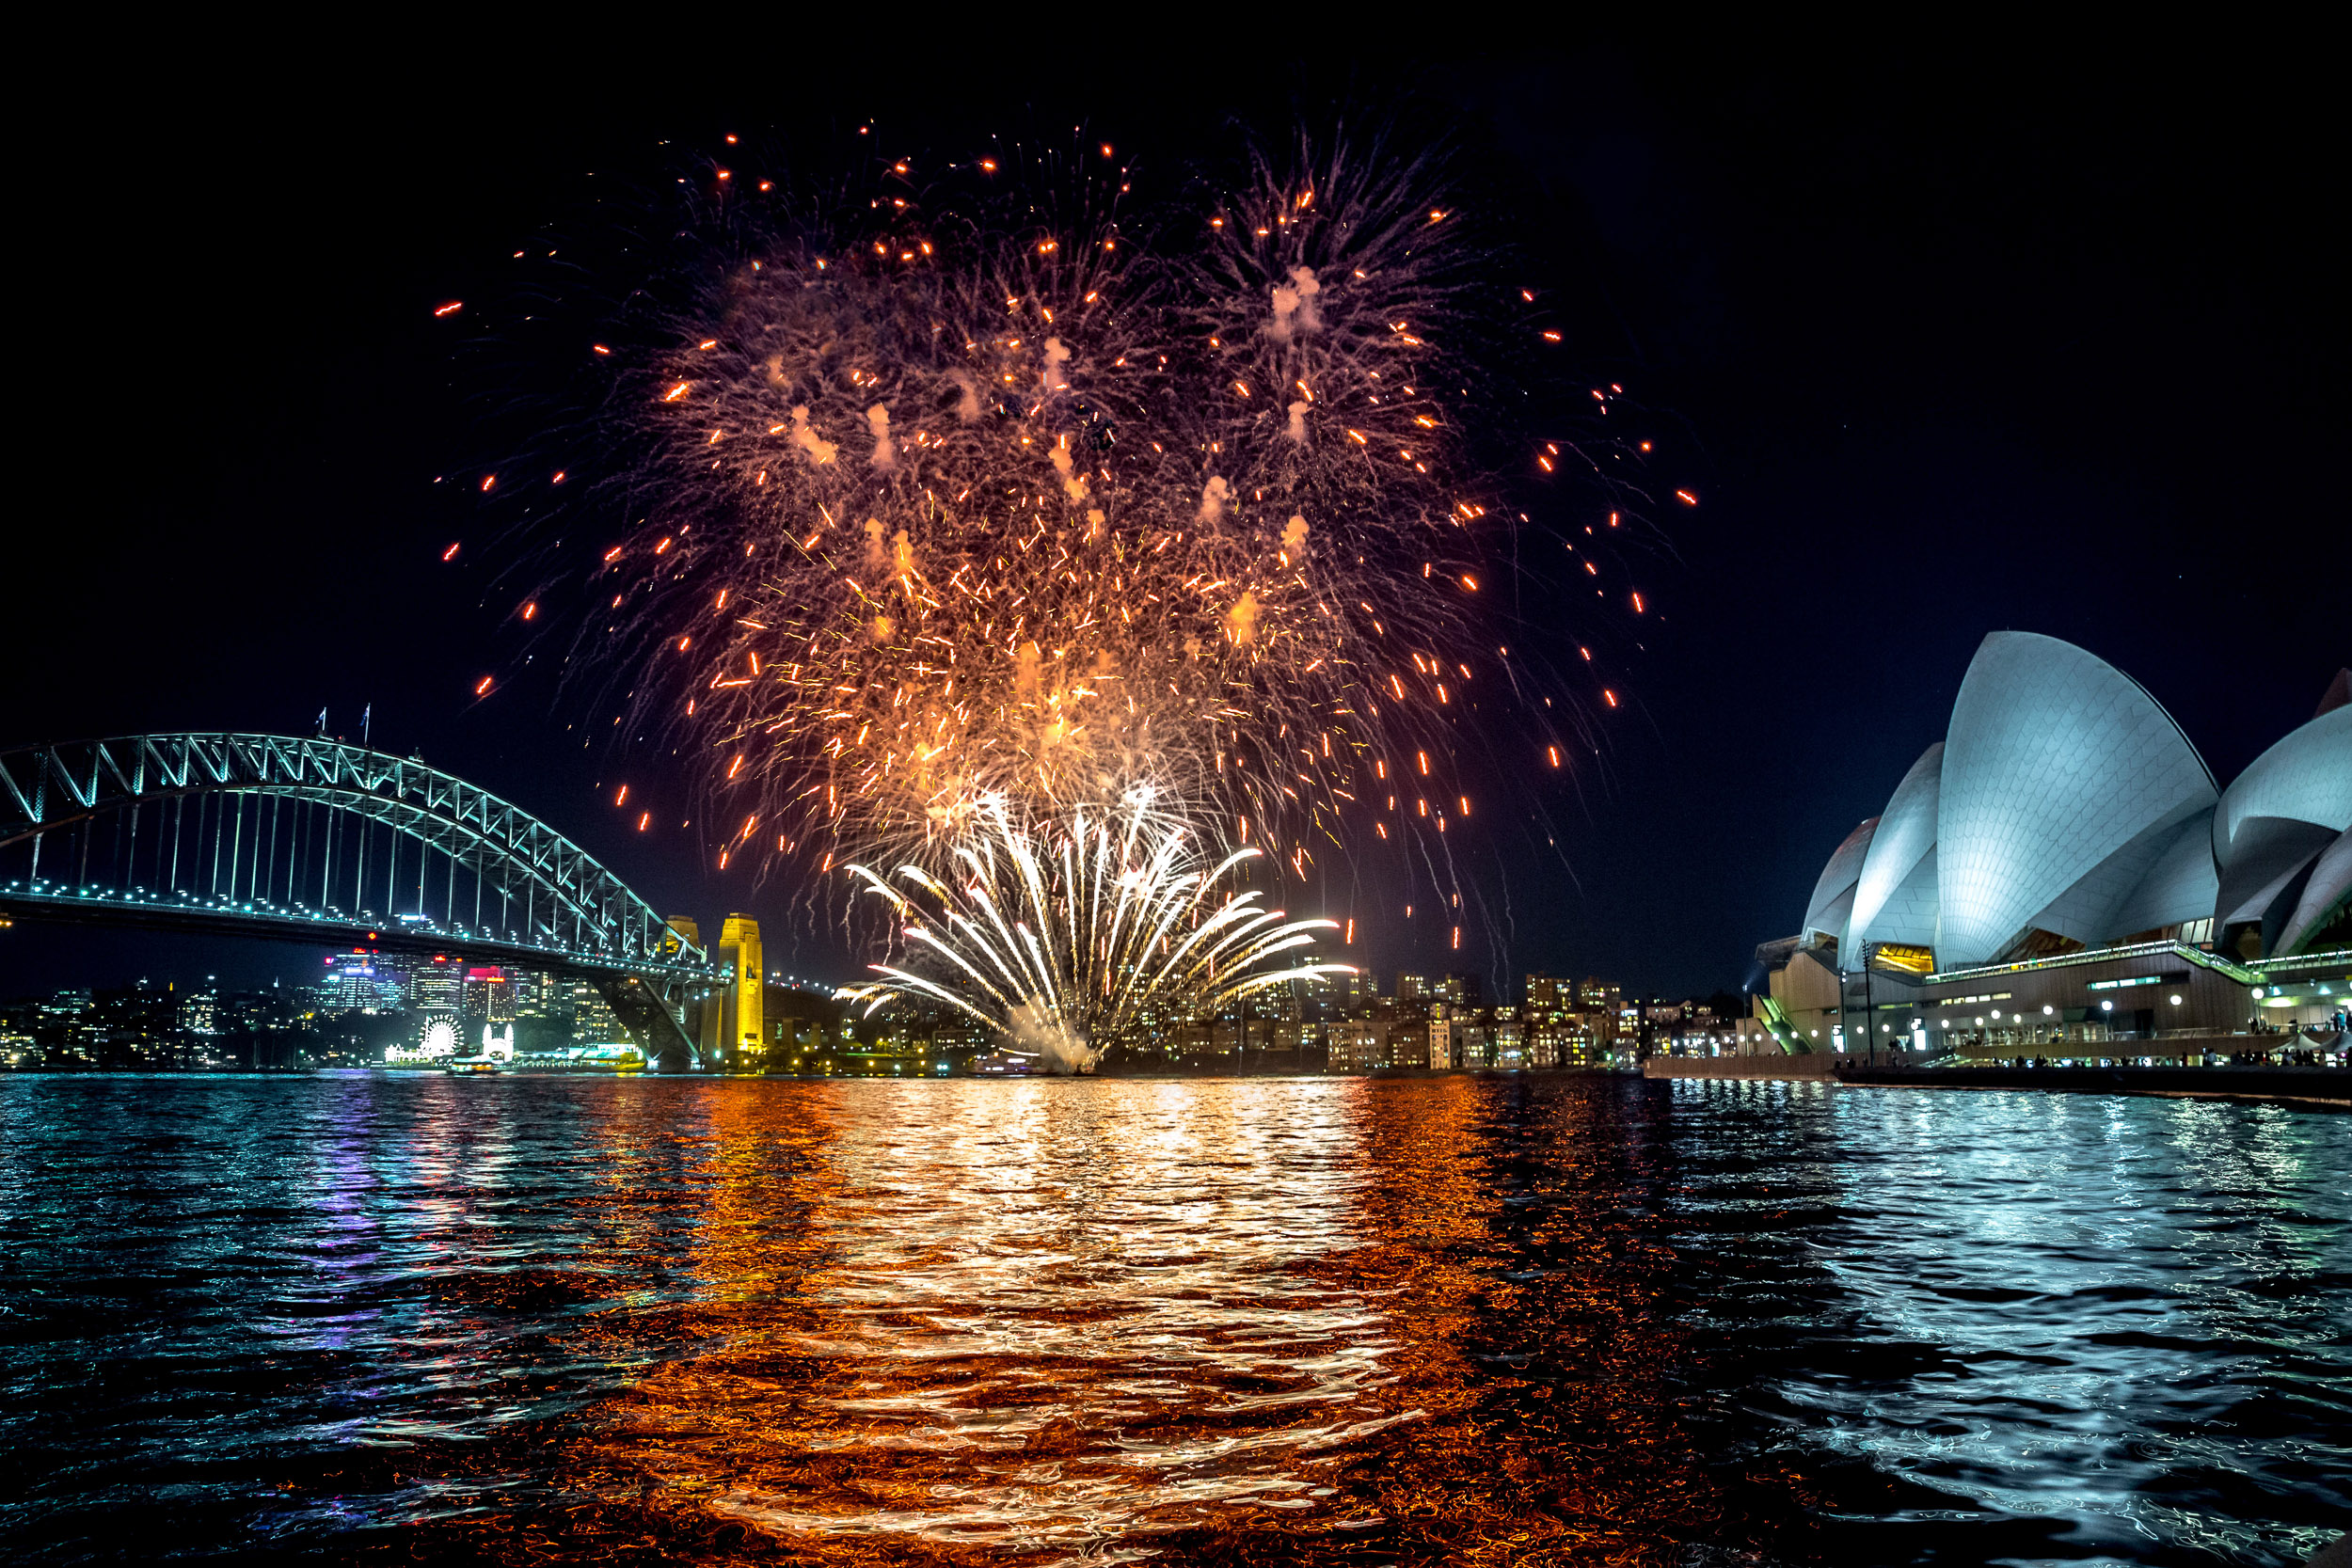 Sydney Harbour Fireworks - NBC Today Show broadcast